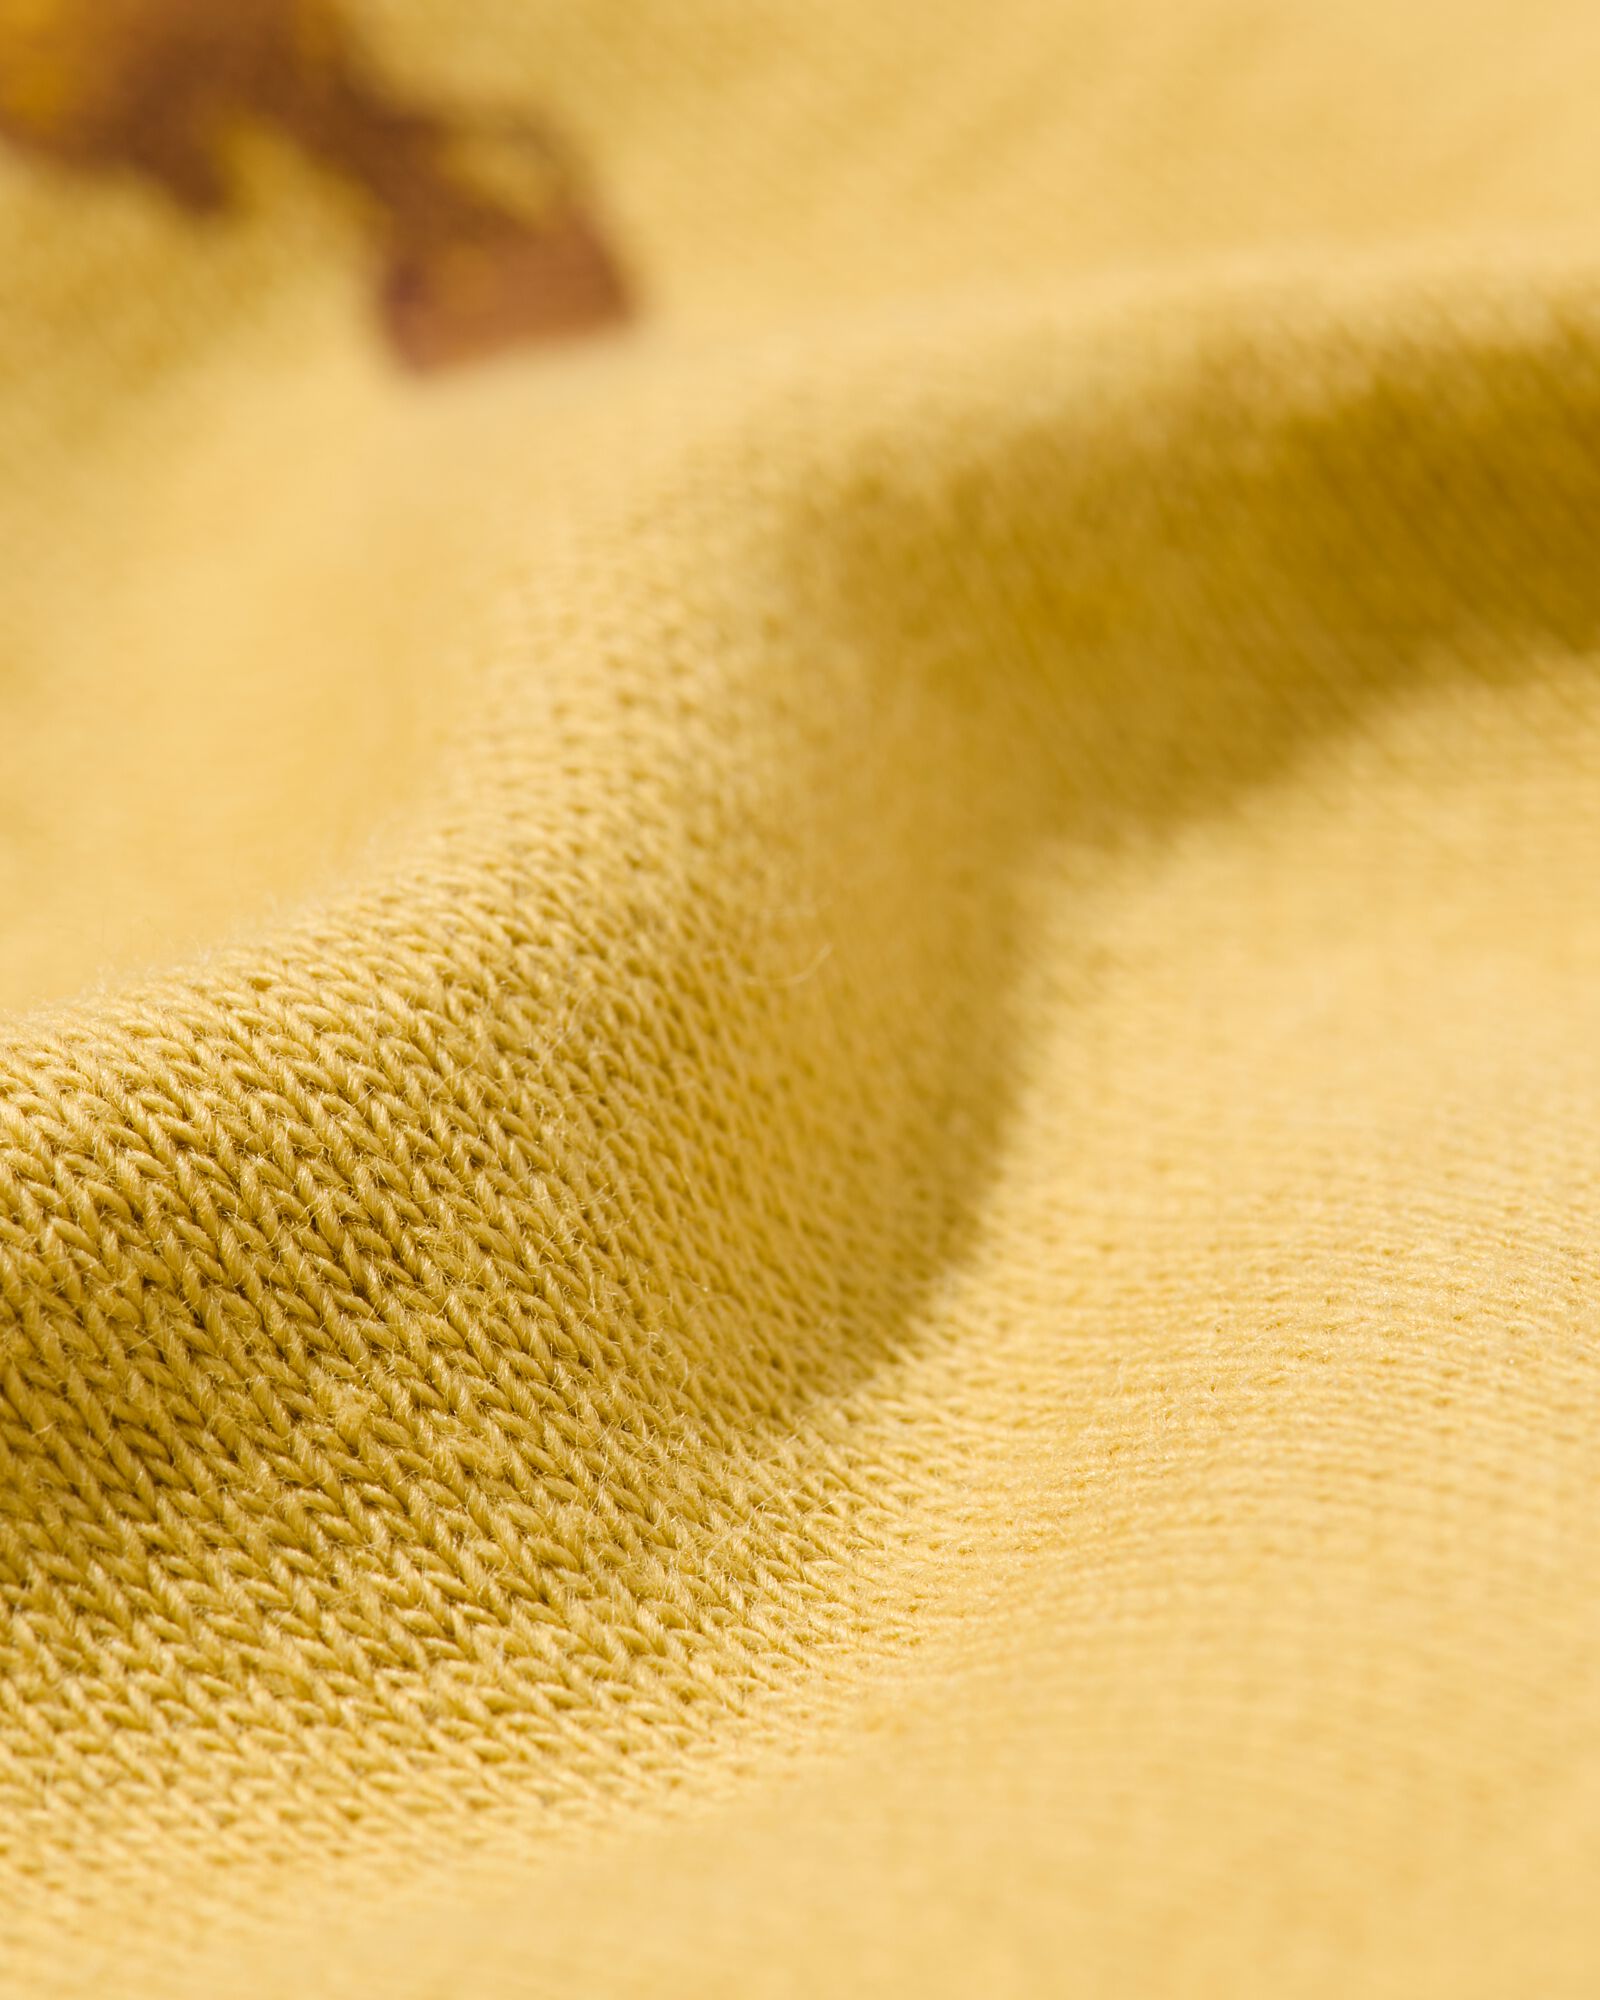 kinder sweater bizon geel 134/140 - 30770845 - HEMA